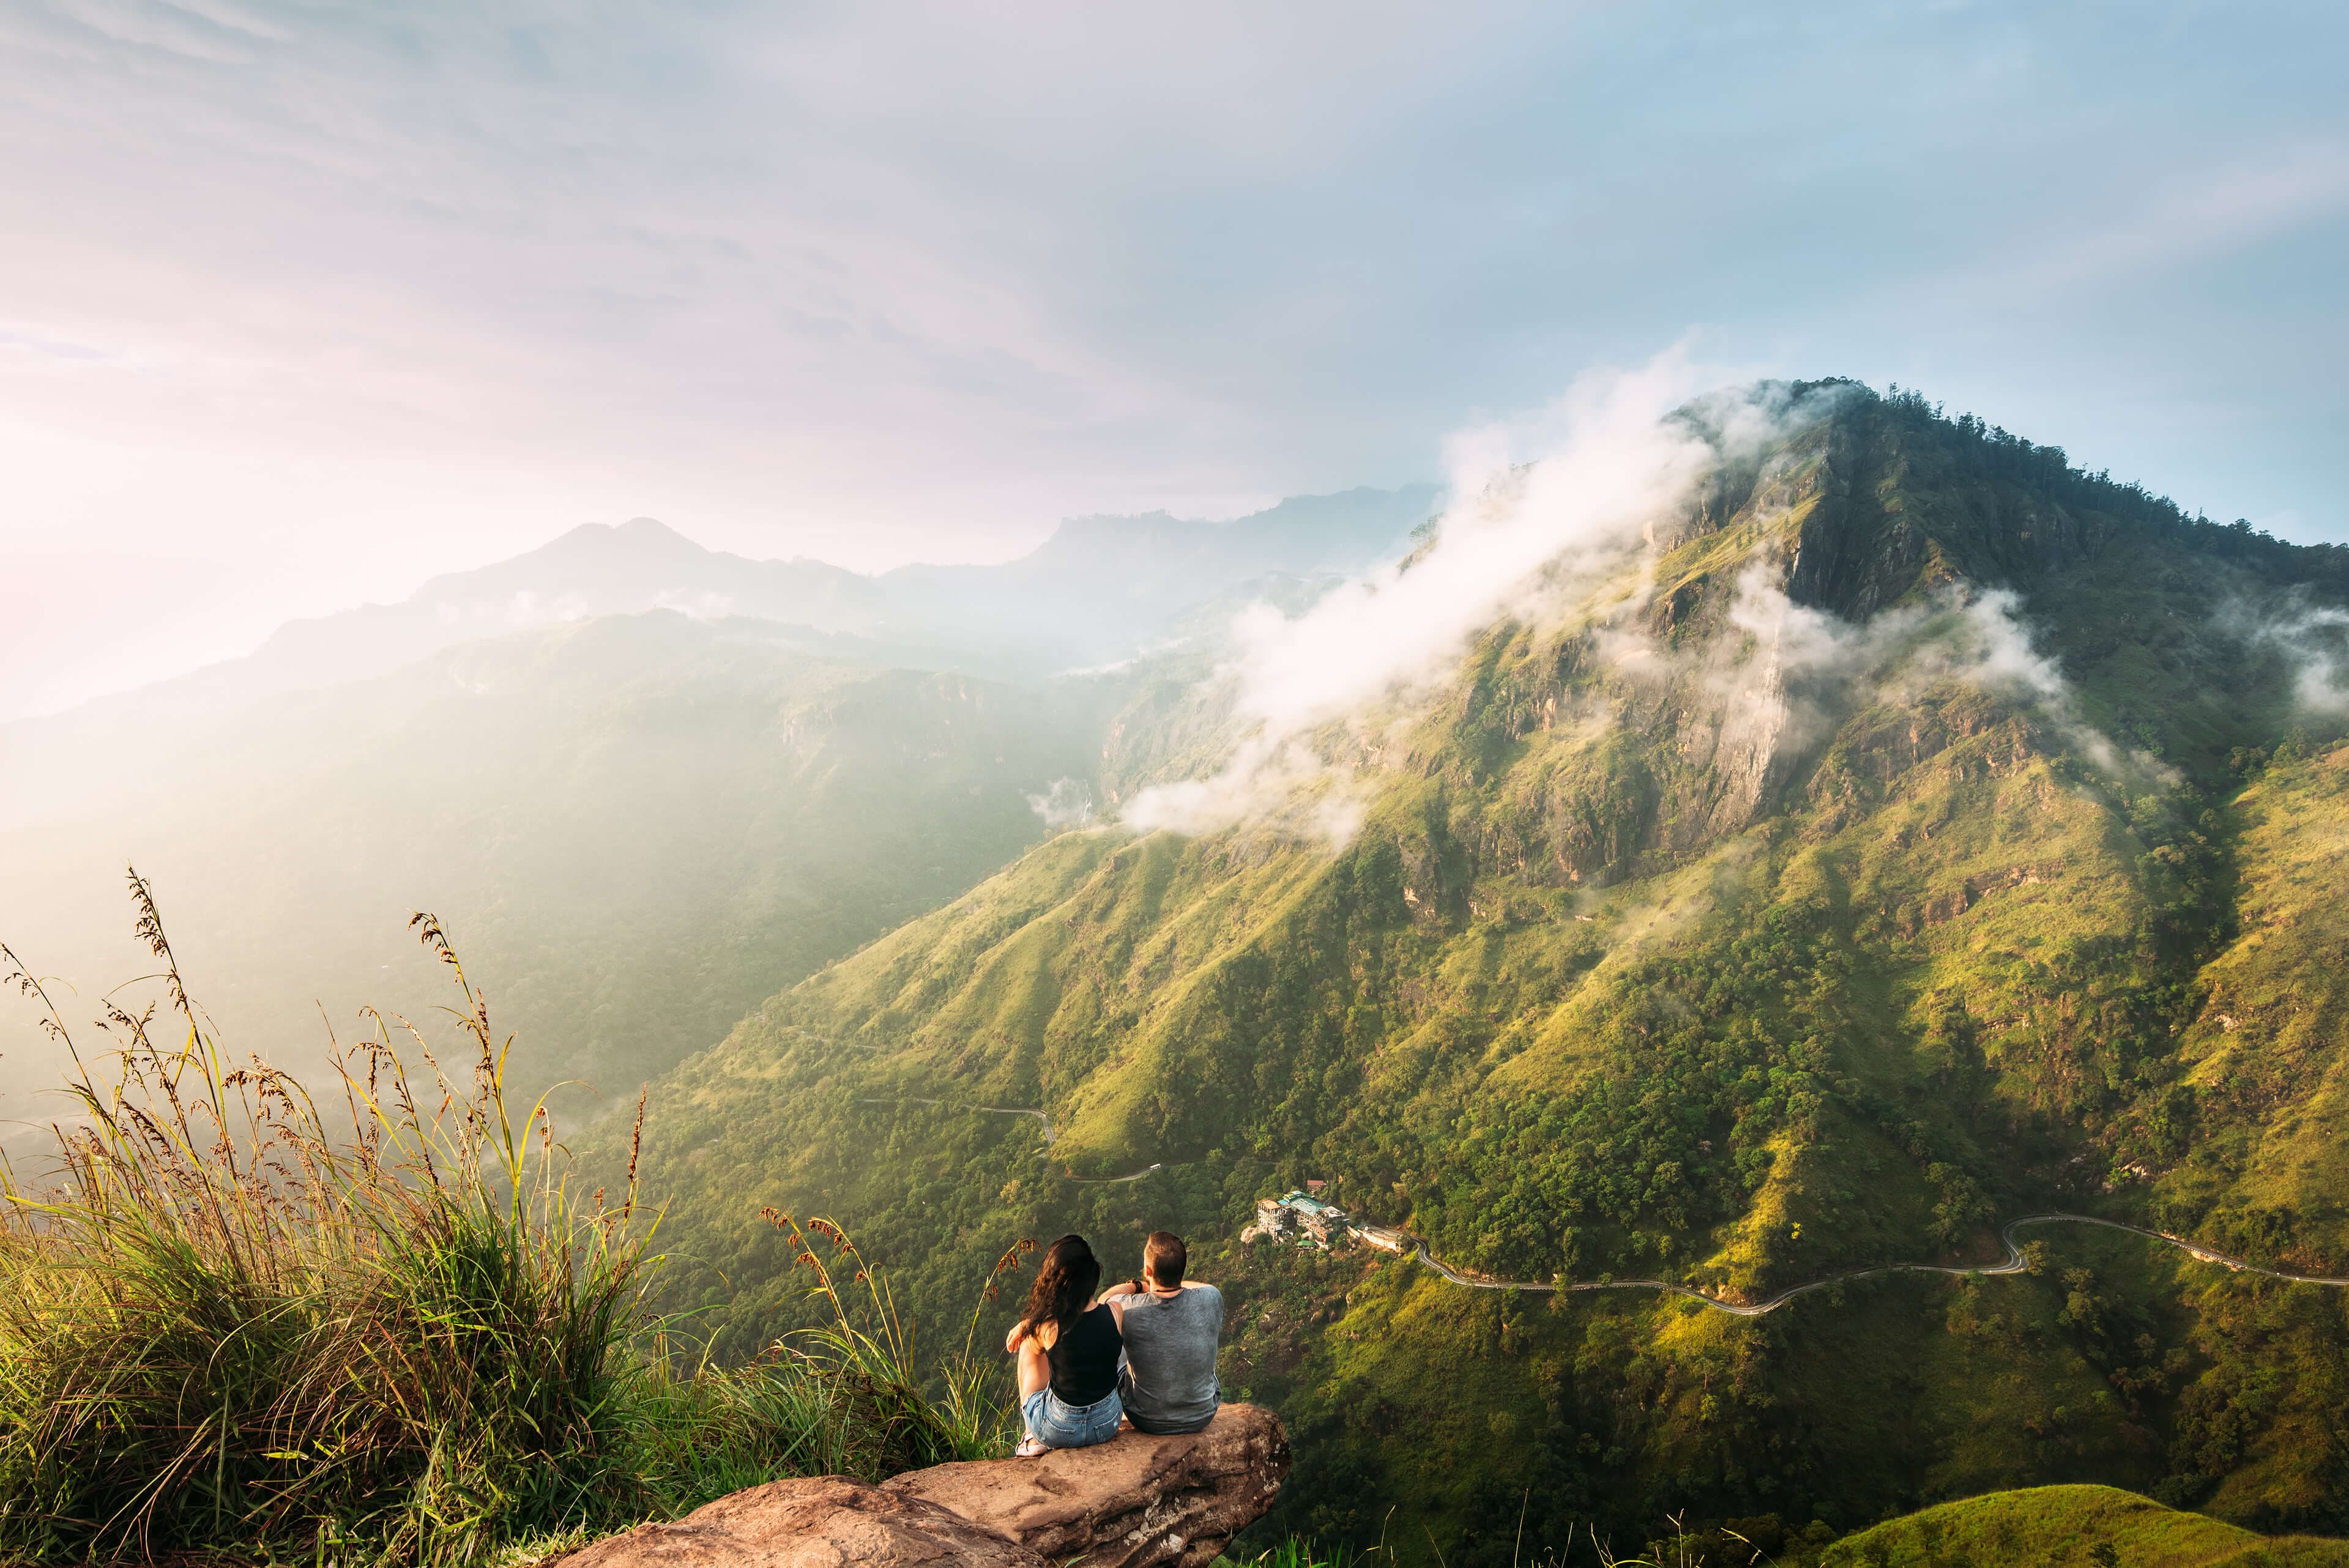 The couple greets the sunrise in the mountains at Ella, Sri Lanka.